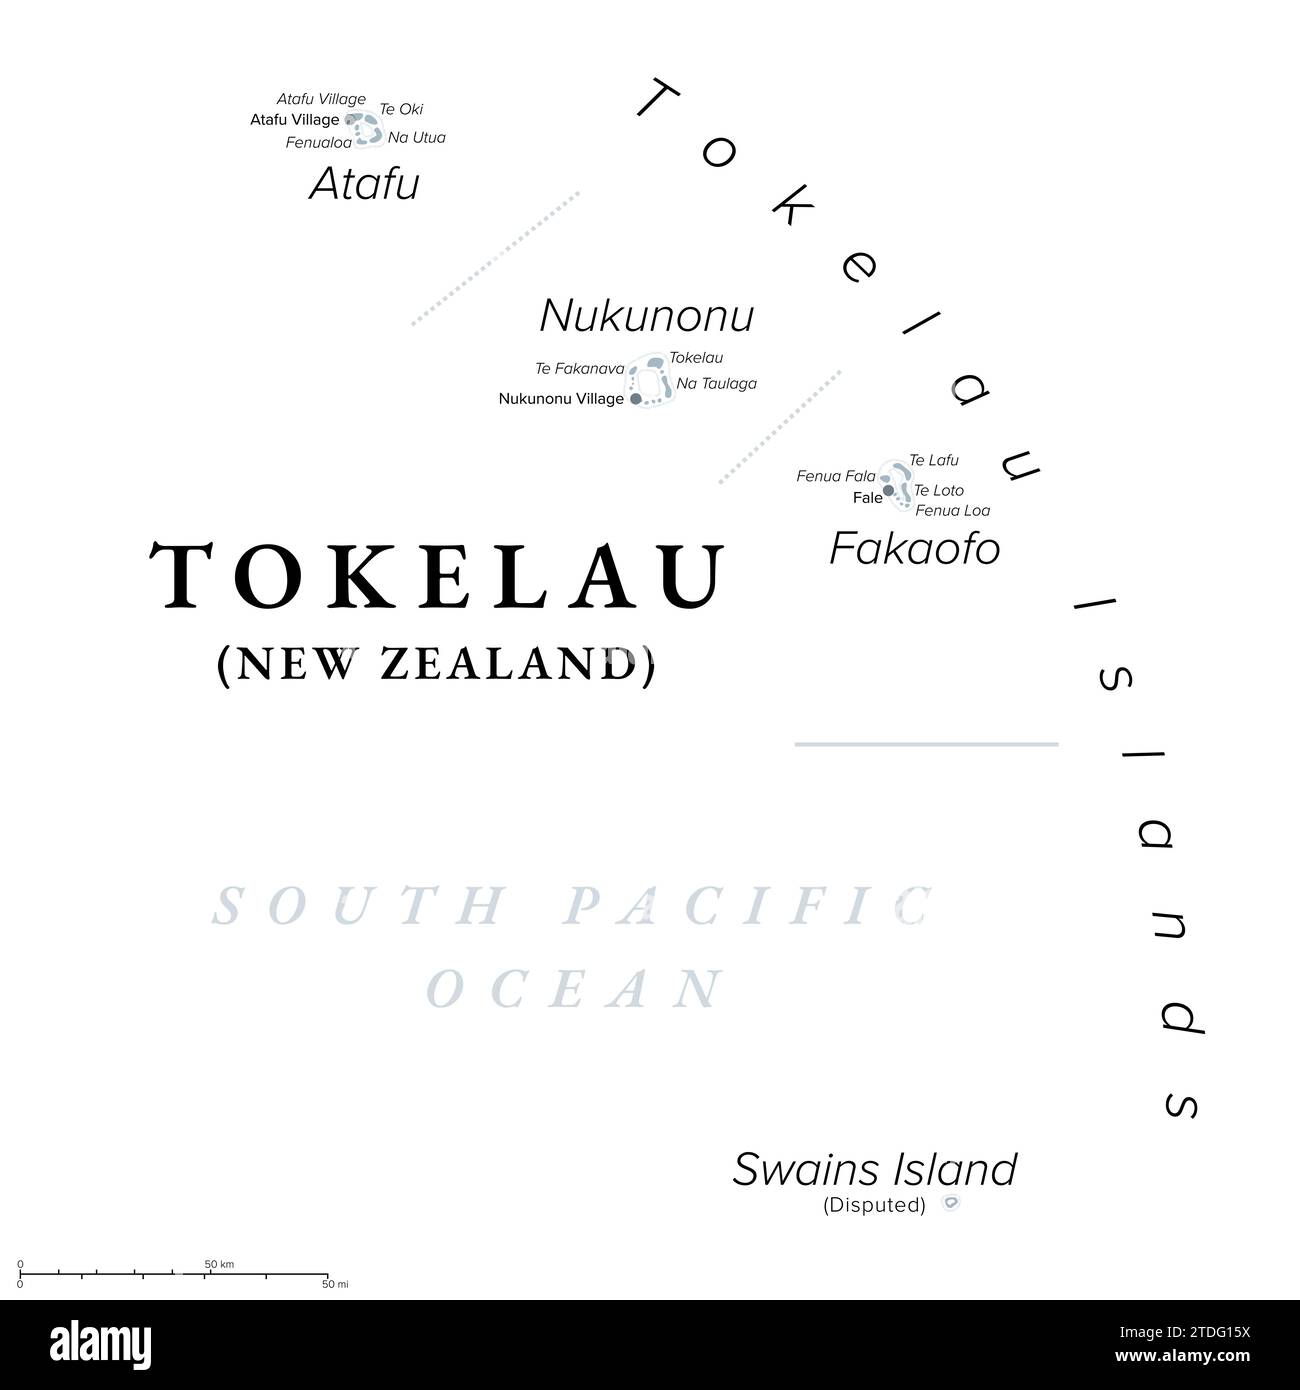 Tokelau, dependant territory of New Zealand, political map. South Pacific archipelago consisting of tropical coral atolls Atafu, Nukunonu and Fakaofo. Stock Photo